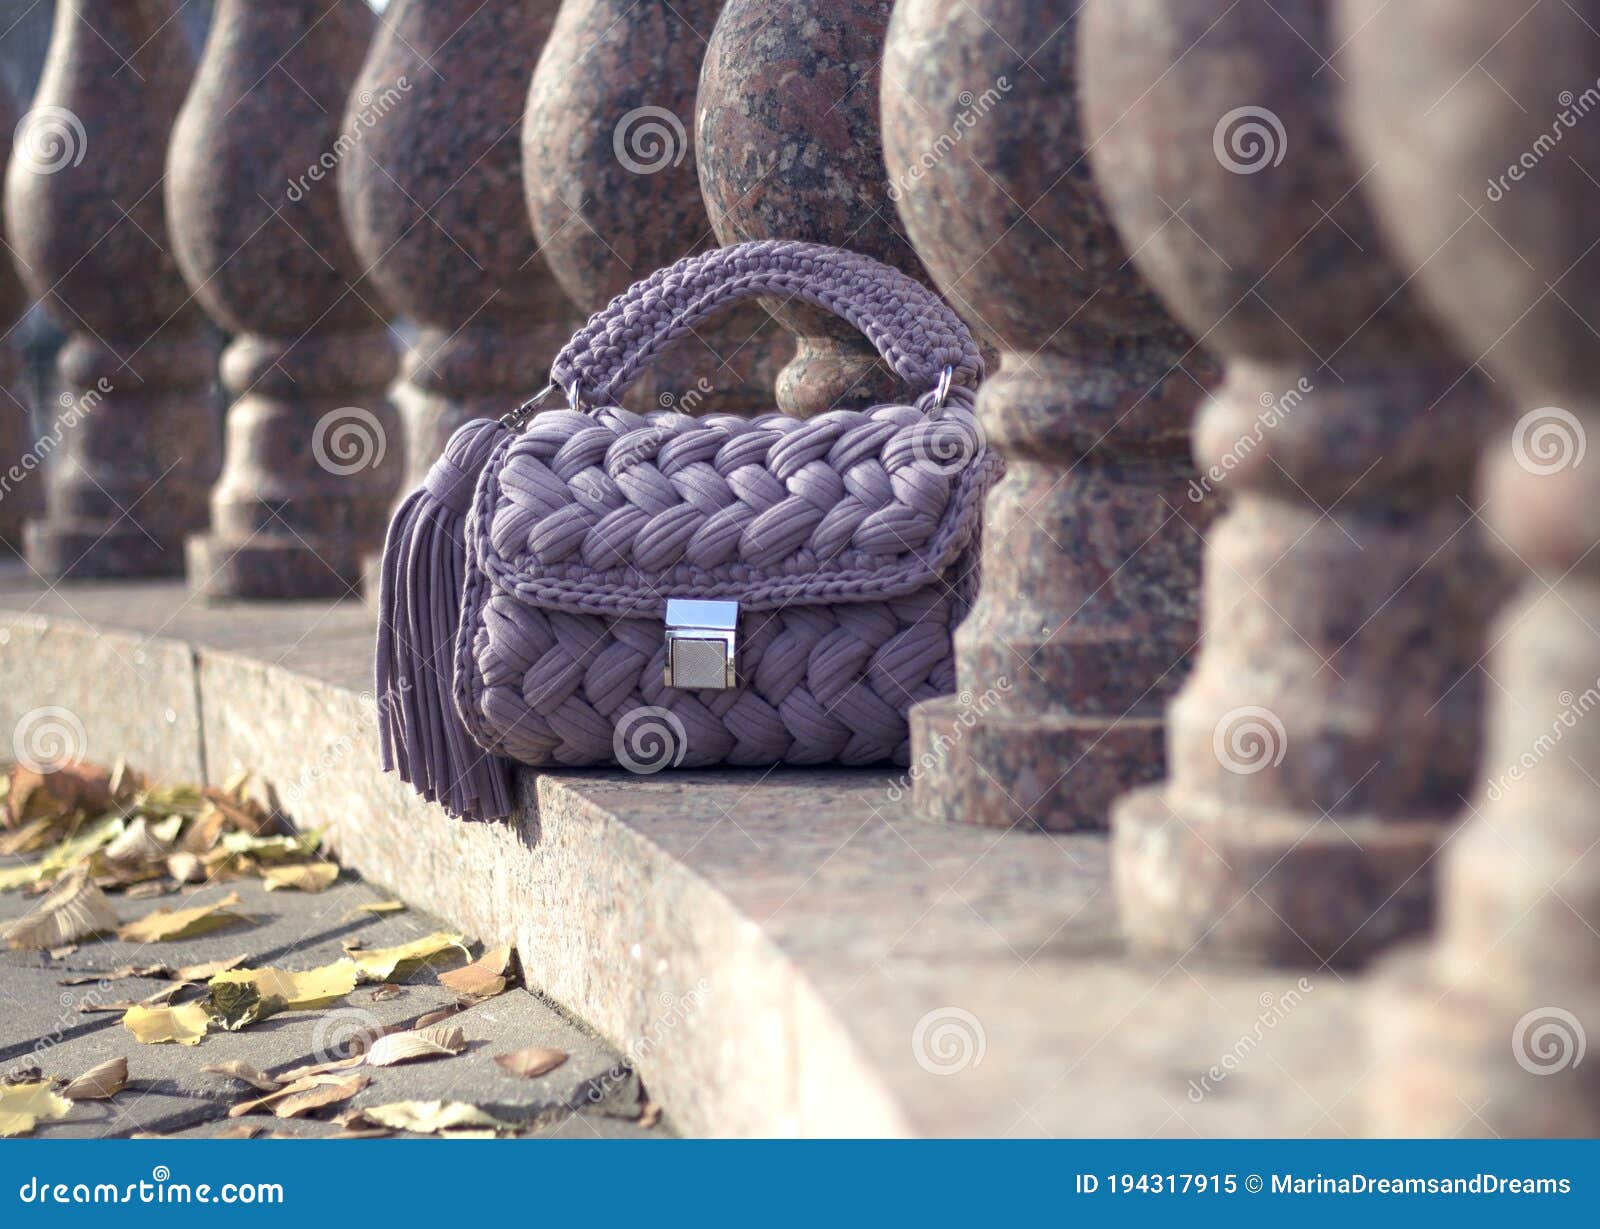 handmade textile knitted bag